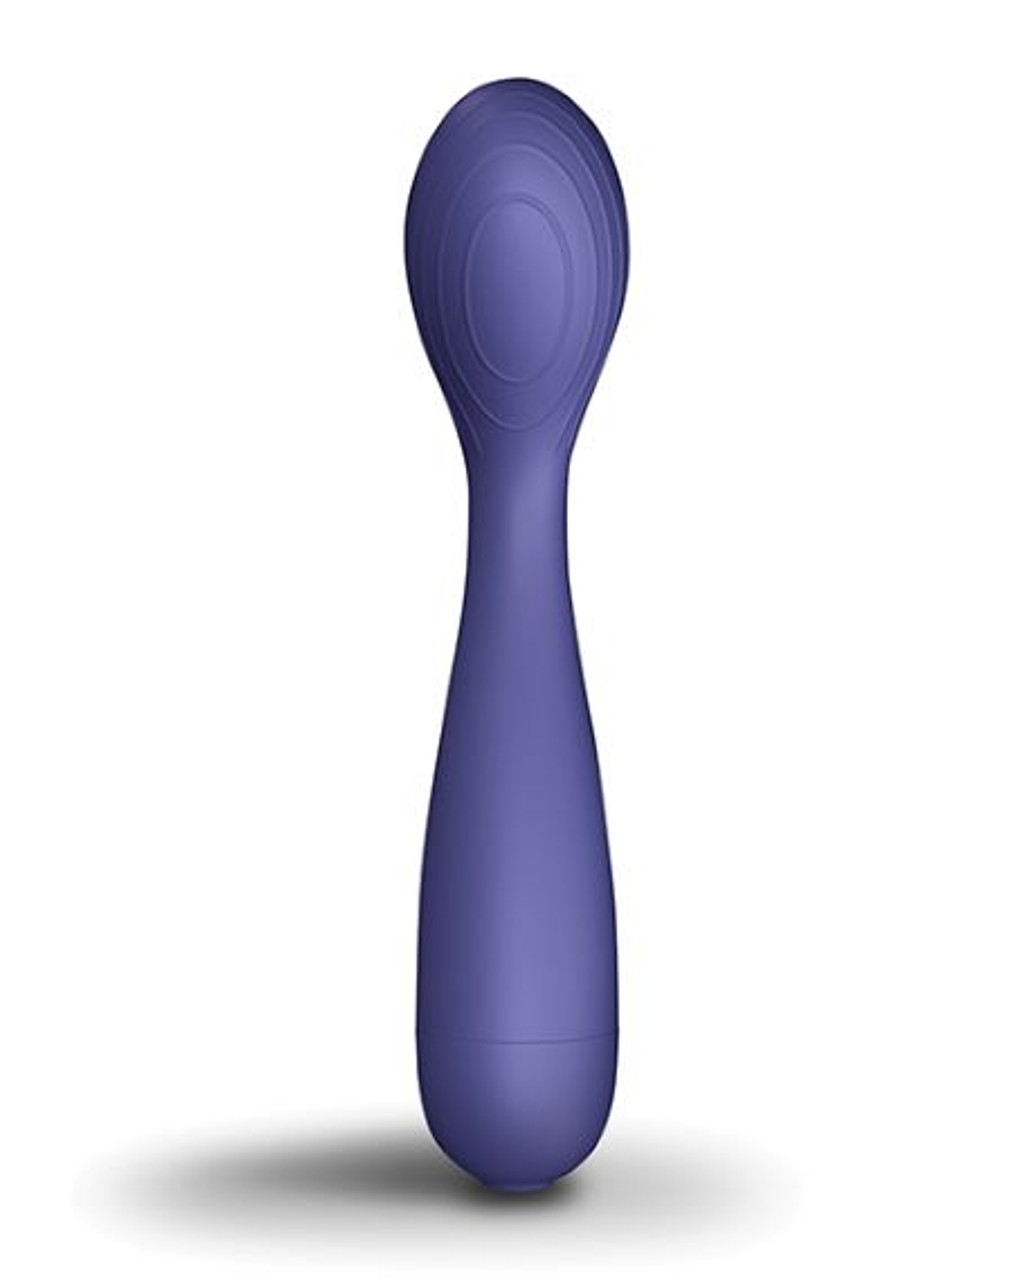 Sugarboo Peri Berri G Spot Vibrator | Buy vibrators for women online at Condom Depot